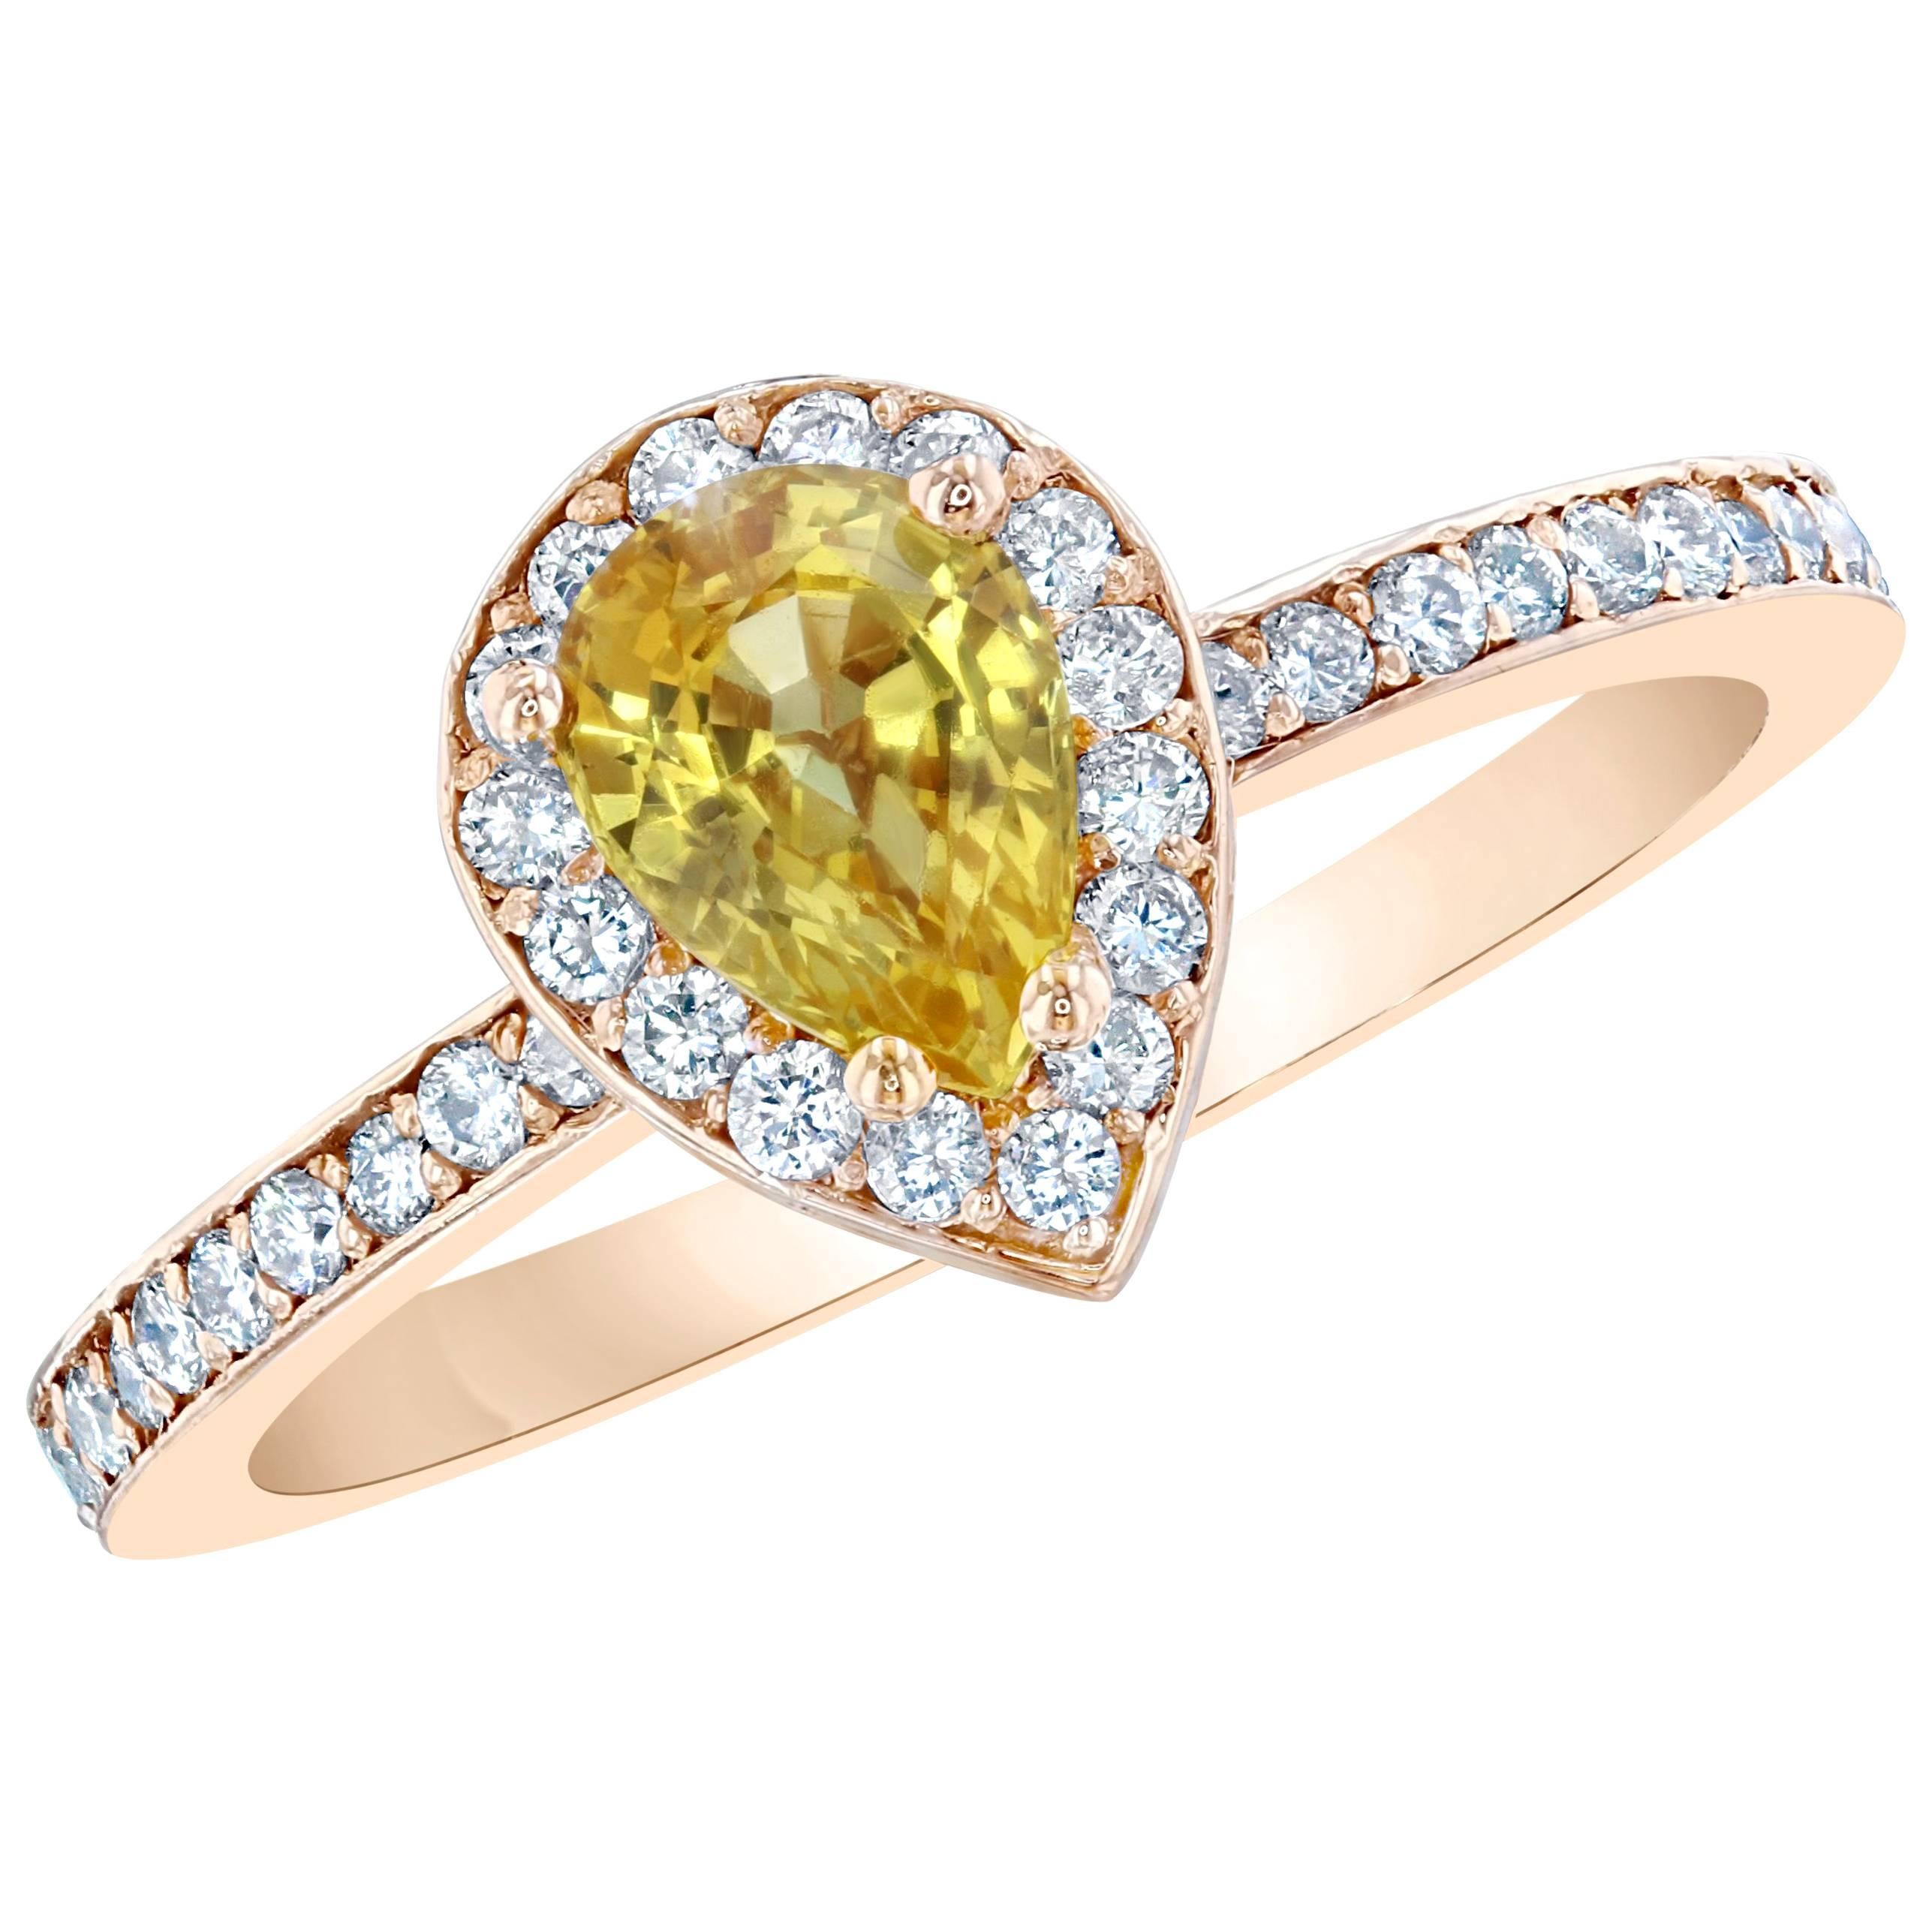 1.24 Carat Pear Cut Yellow Sapphire Diamond 14 Karat Rose Gold Engagement Ring